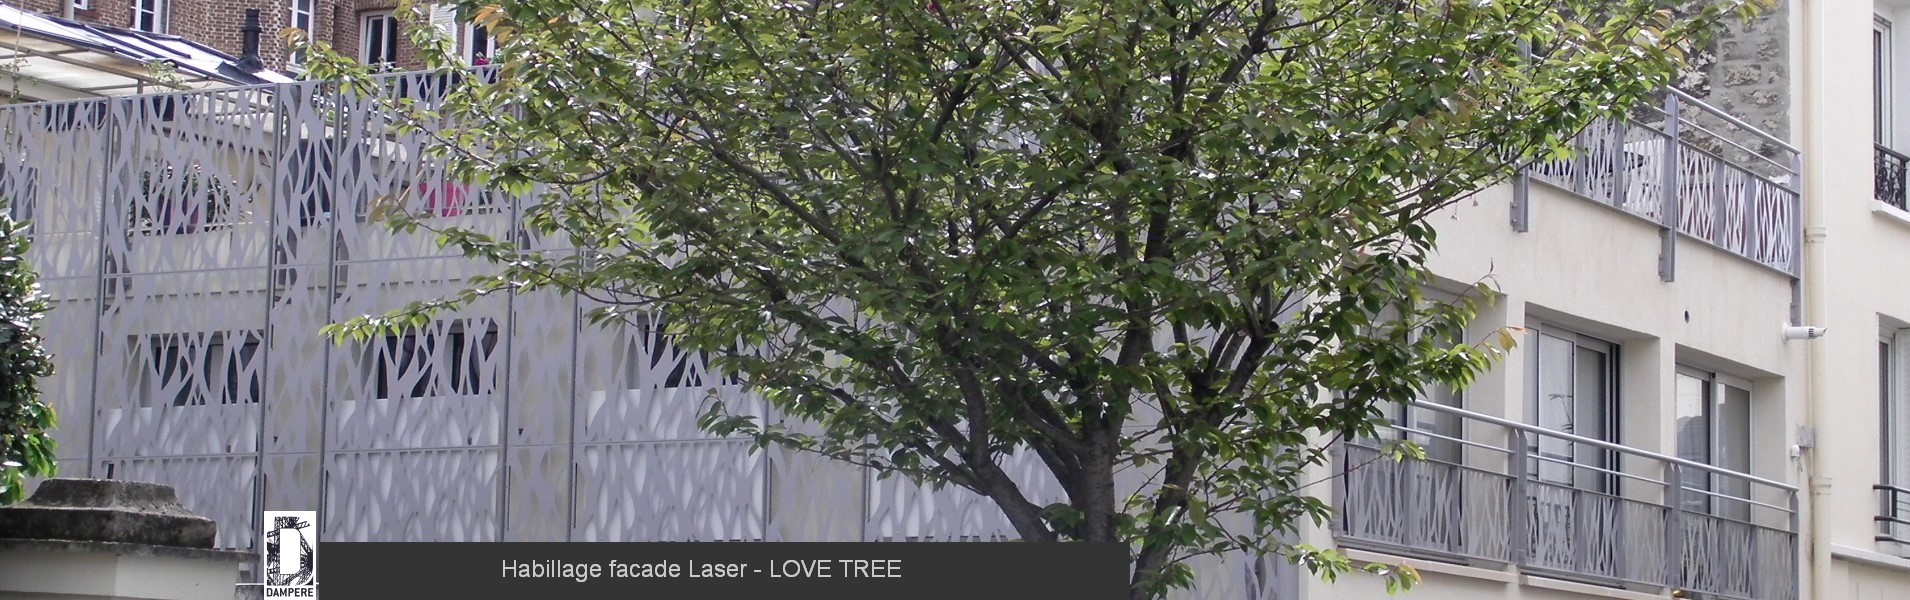 Habillage facade Laser LOVE TREE 6